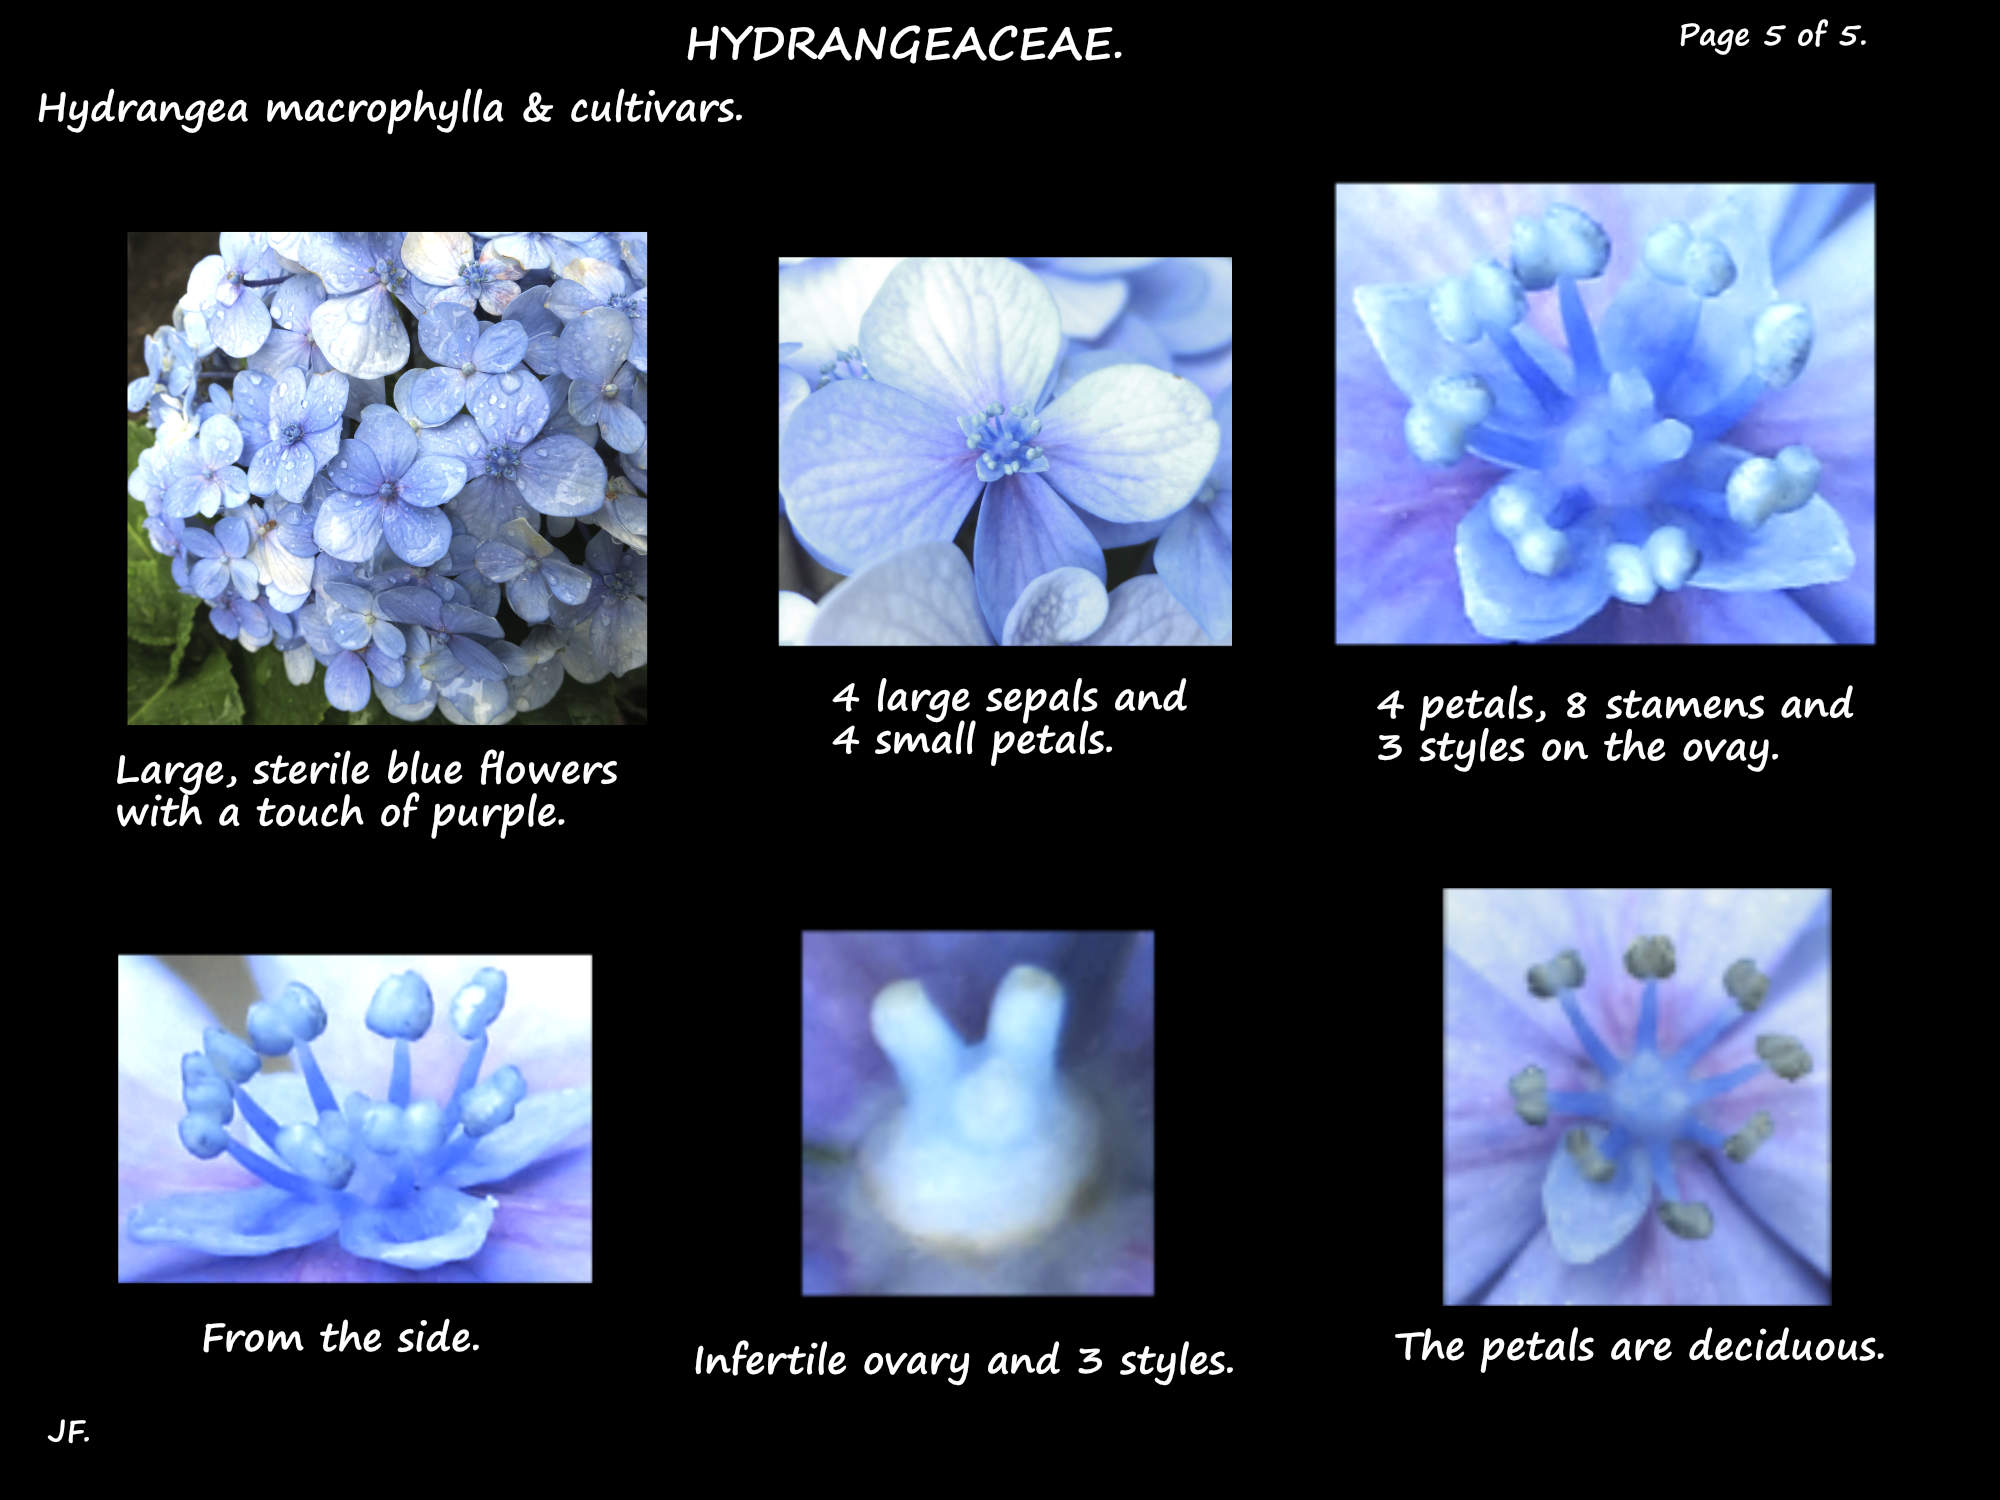 5 Hydrangea perianth, stamens & ovary